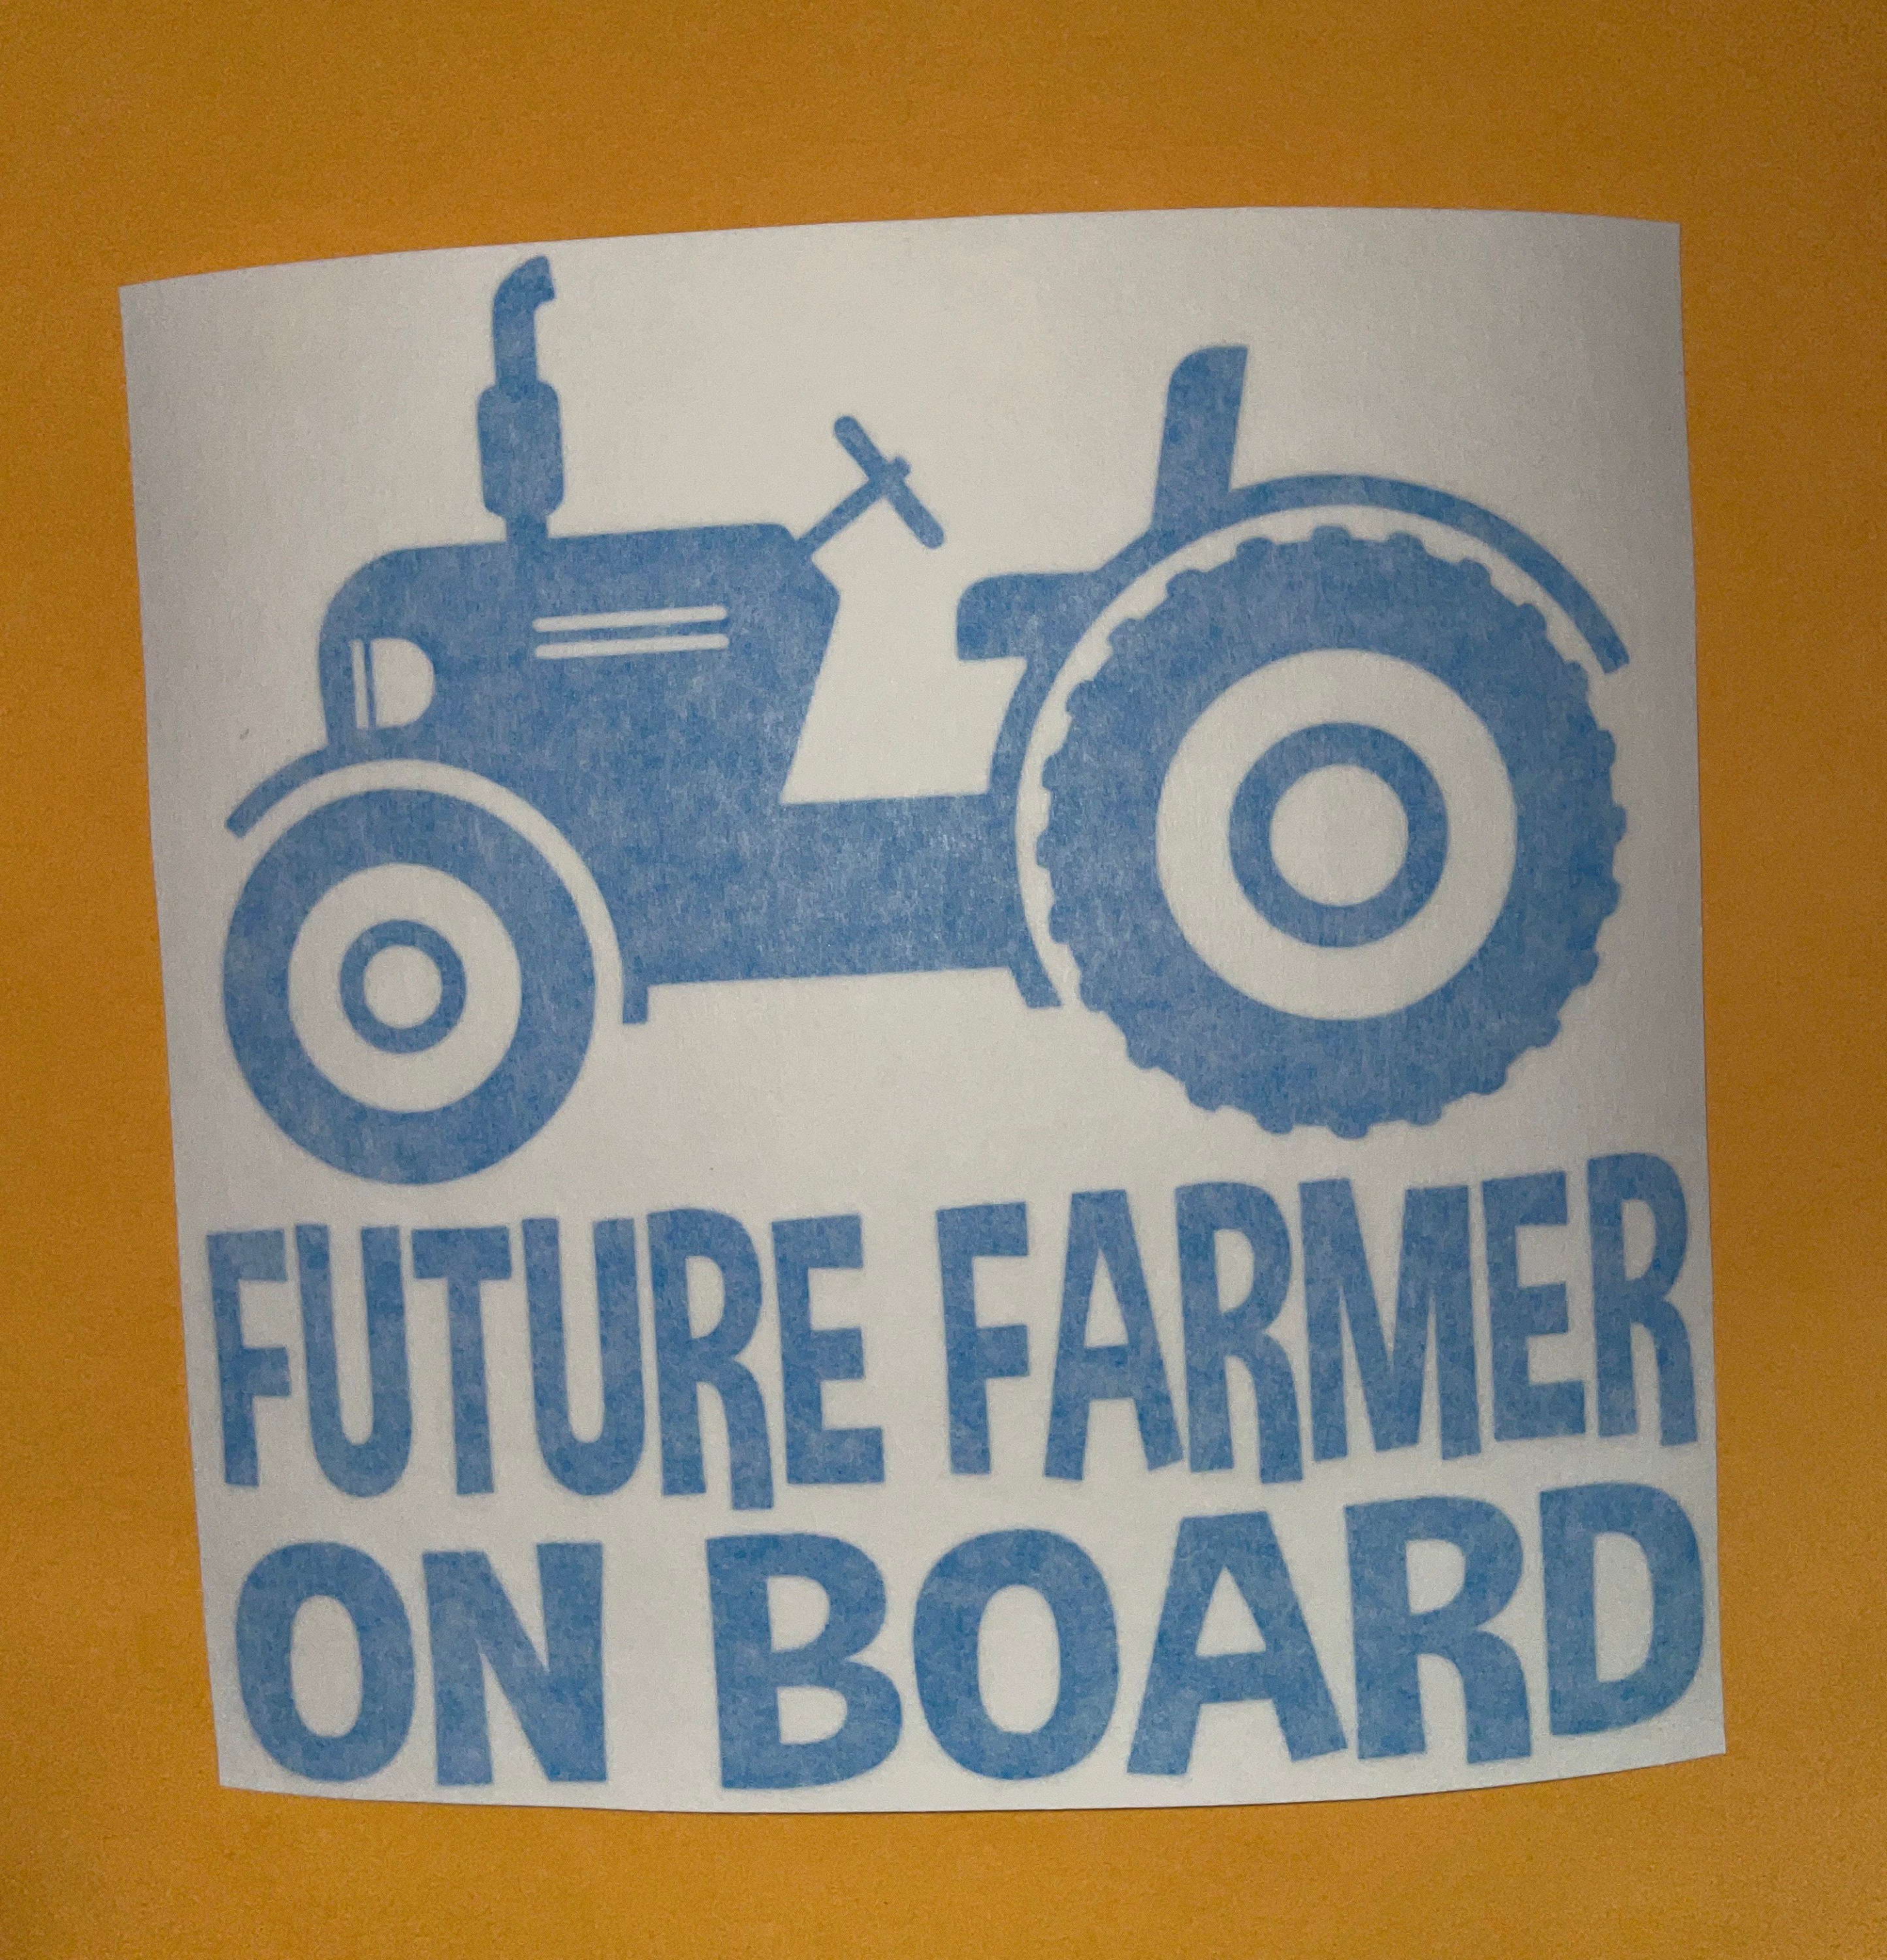 Buy Future Farmer on Board Vinyl Decal Farmer on Board Car Decal Farmer on  Board Bumper Sticker Future Farmer on Board Window Sticker Online in India  